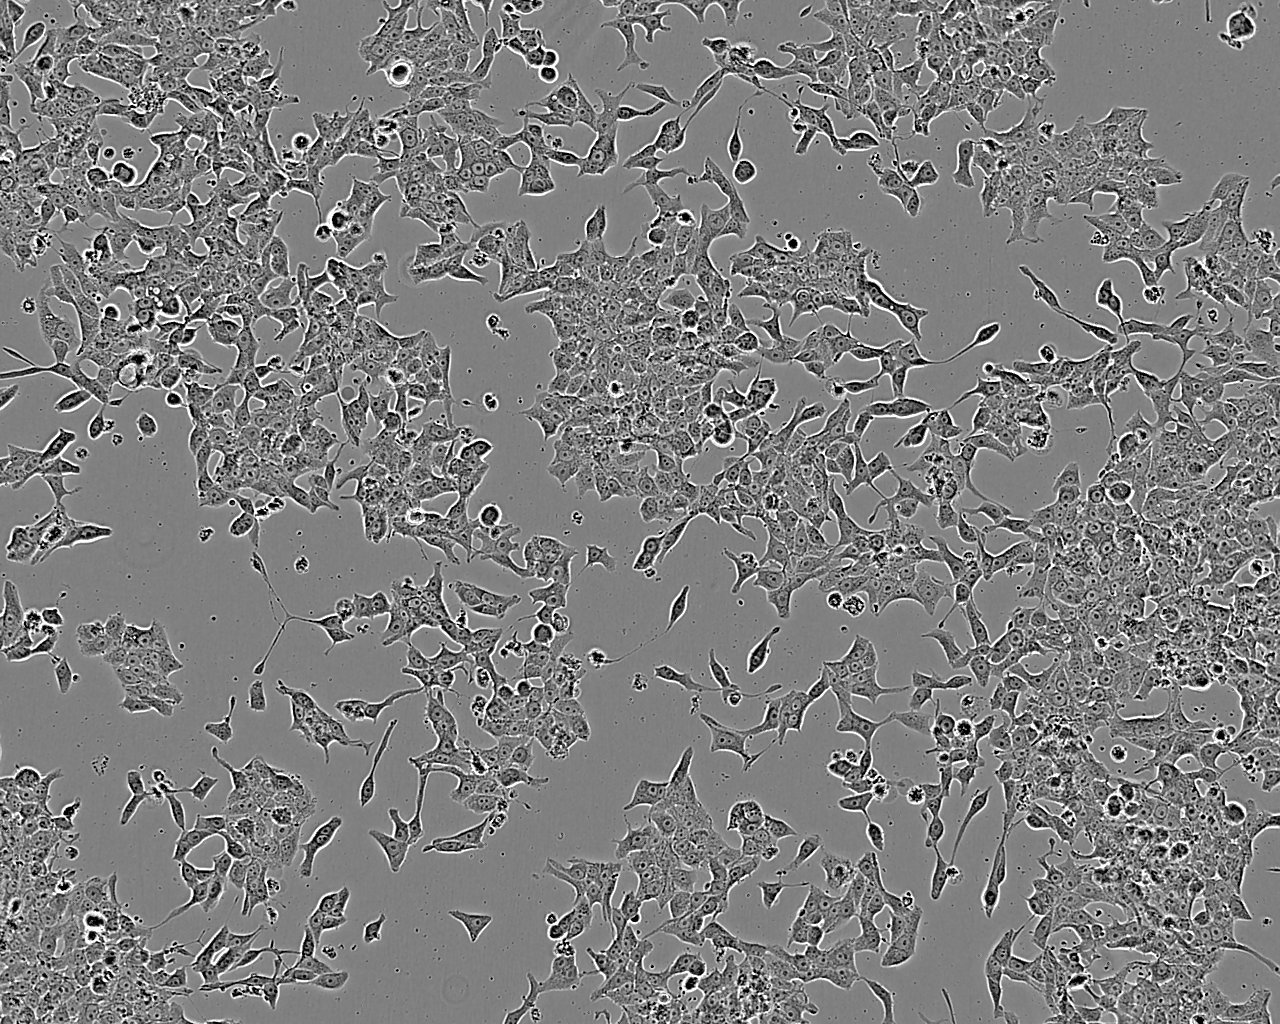 SNU-878 Cell:人肝癌细胞系,SNU-878 Cell